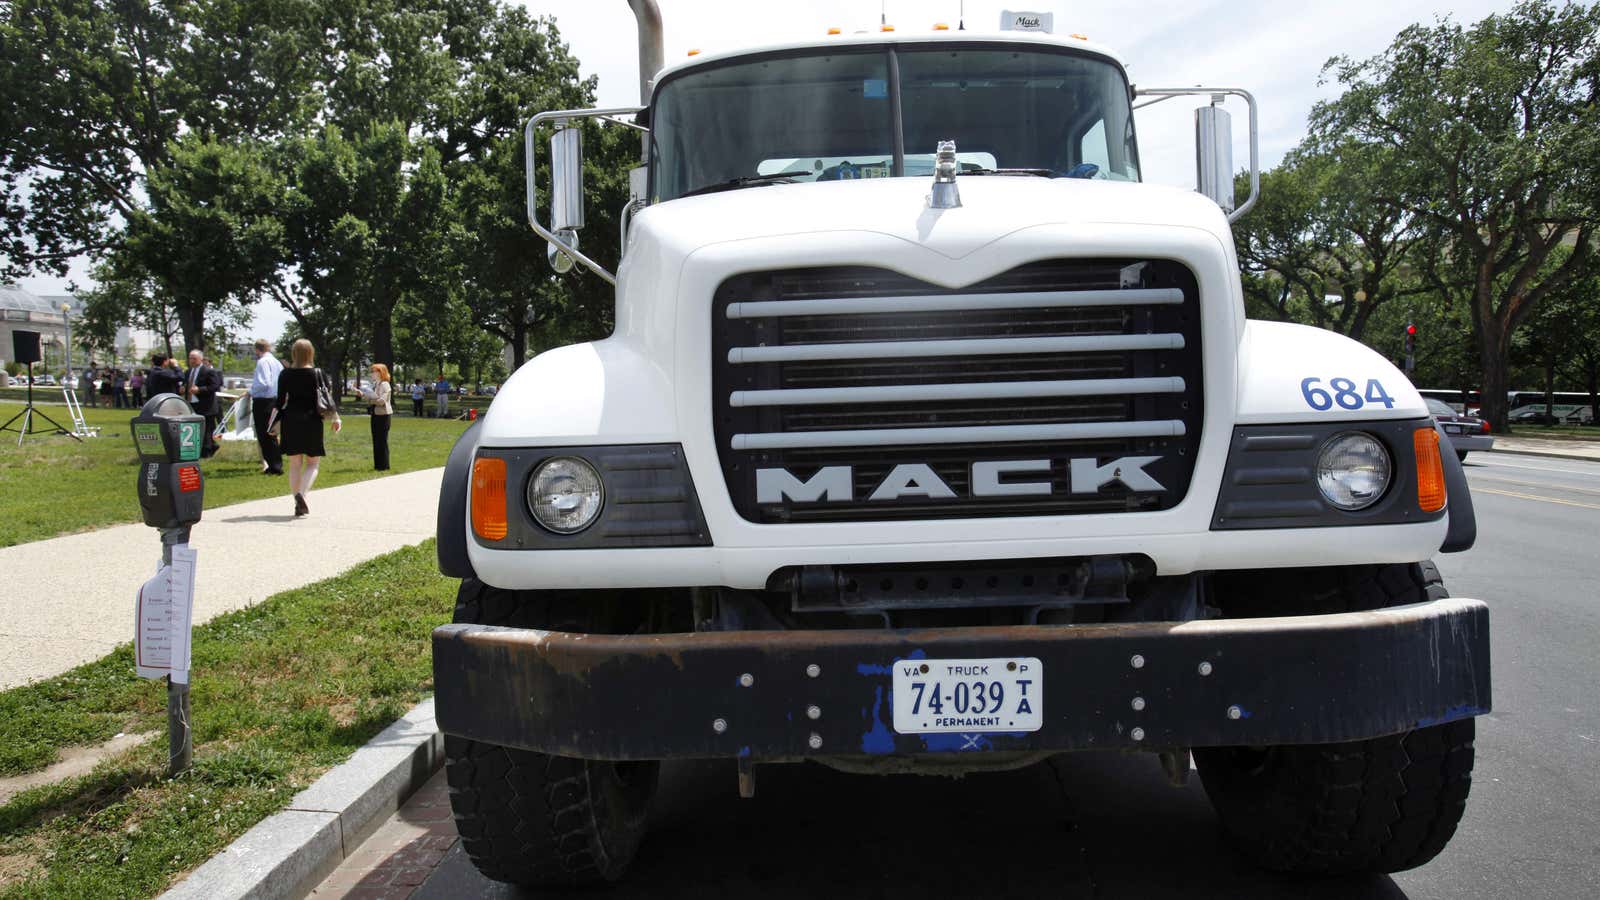 Mack is among Volvo’s truck brands.